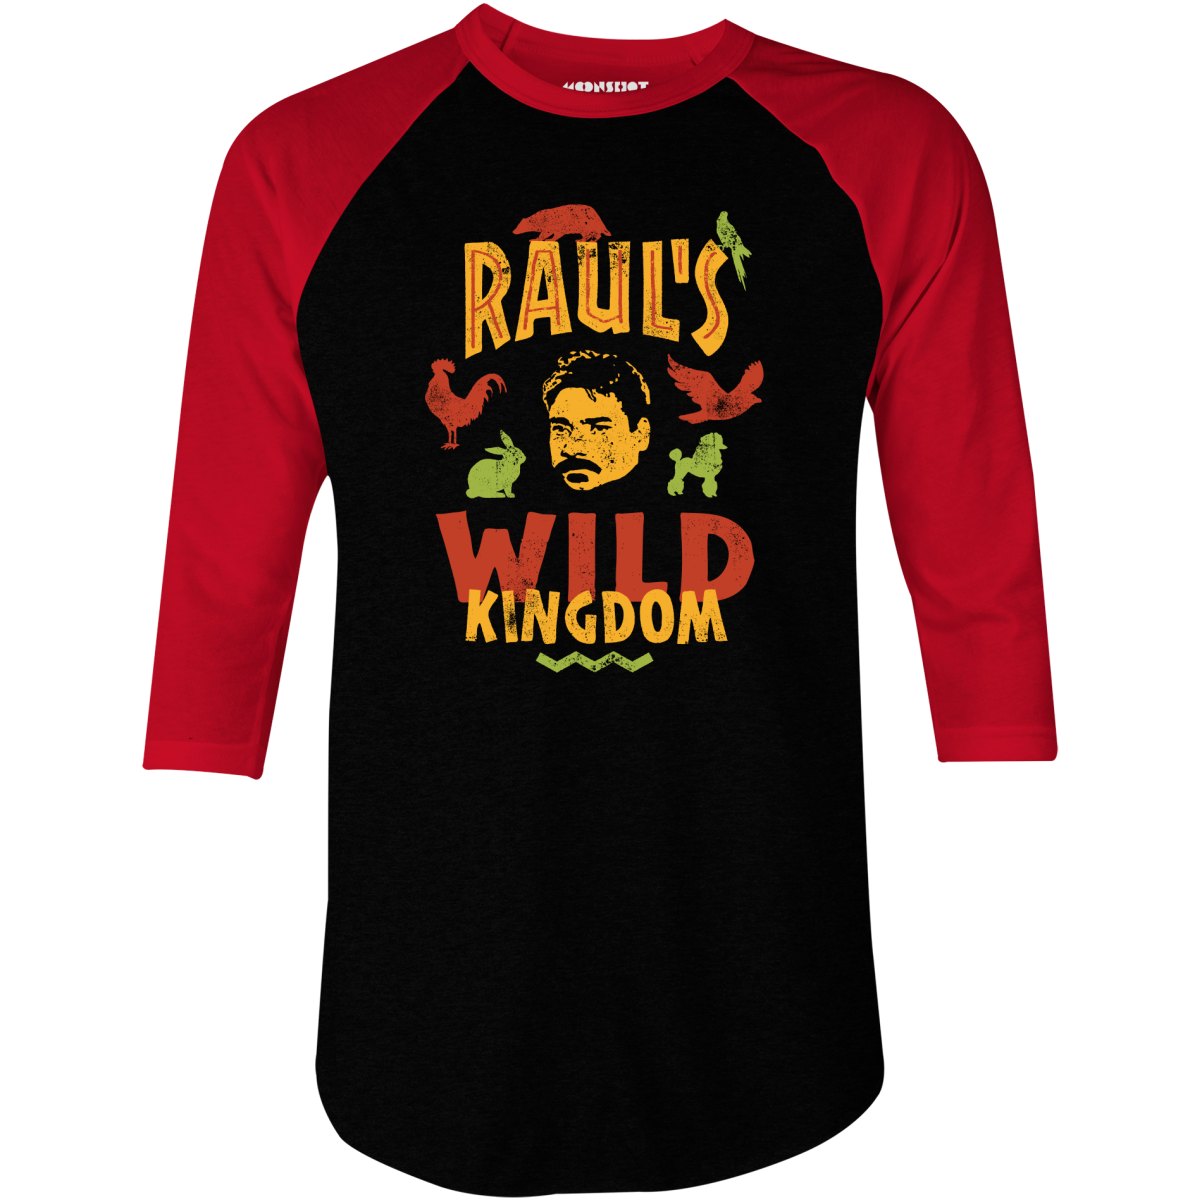 UHF Raul's Wild Kingdom - 3/4 Sleeve Raglan T-Shirt